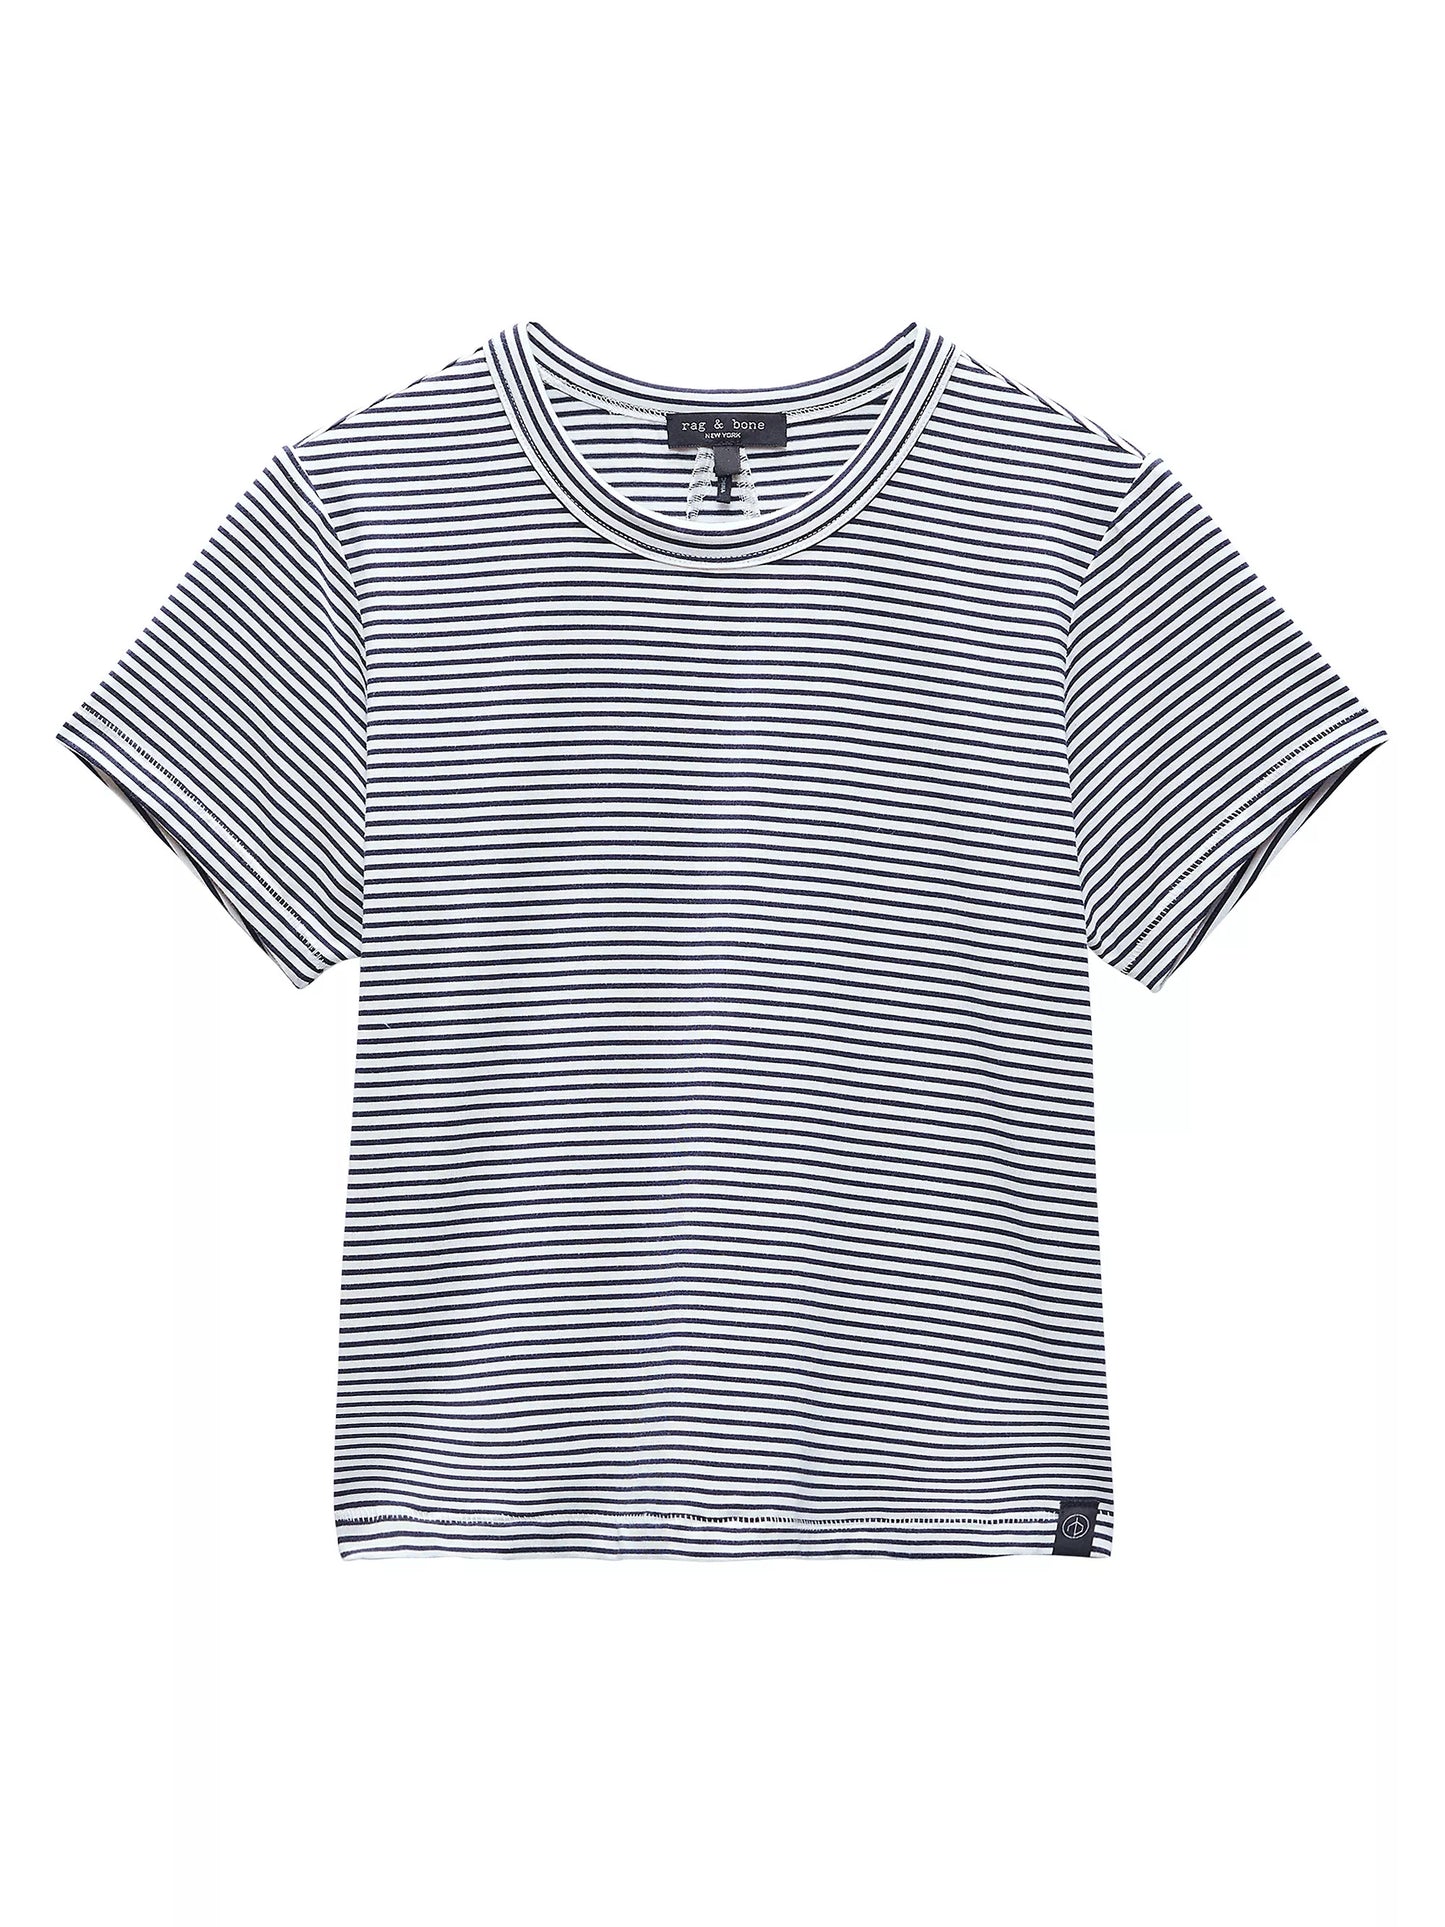 Rag & Bone Women's Luca Striped Baby Tee T-Shirt, Black/White